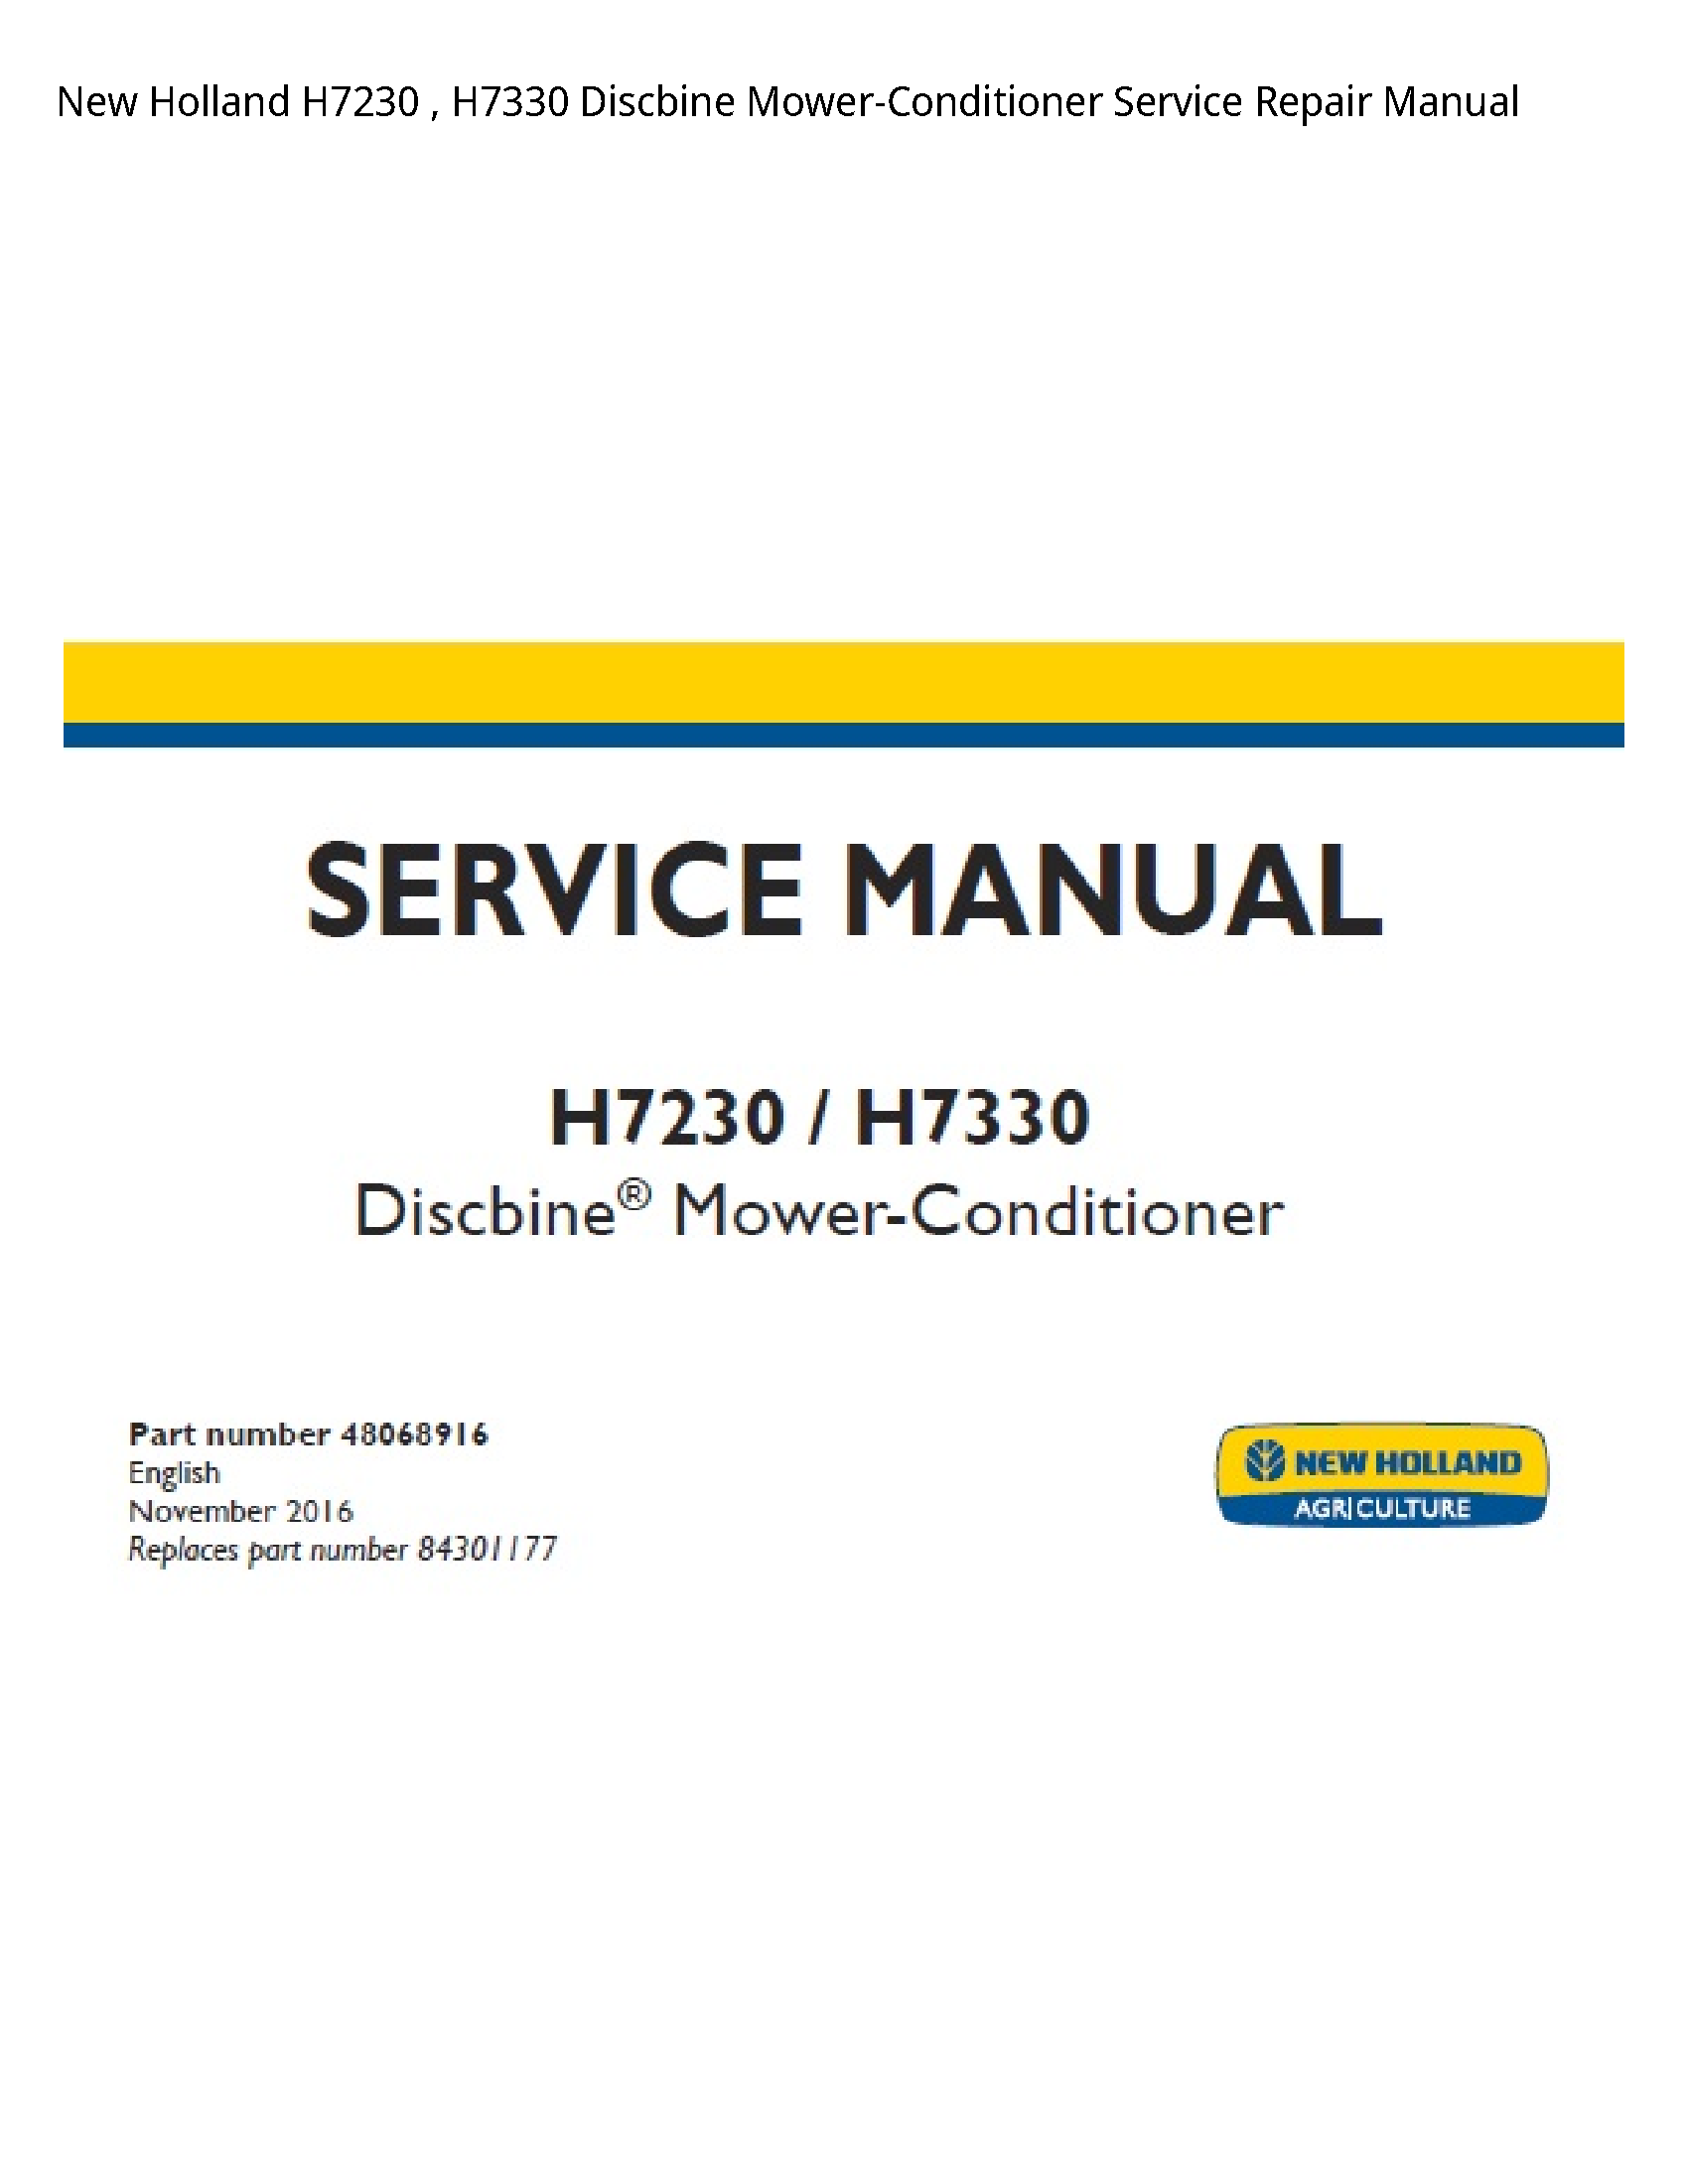 New Holland H7230 Discbine Mower-Conditioner manual